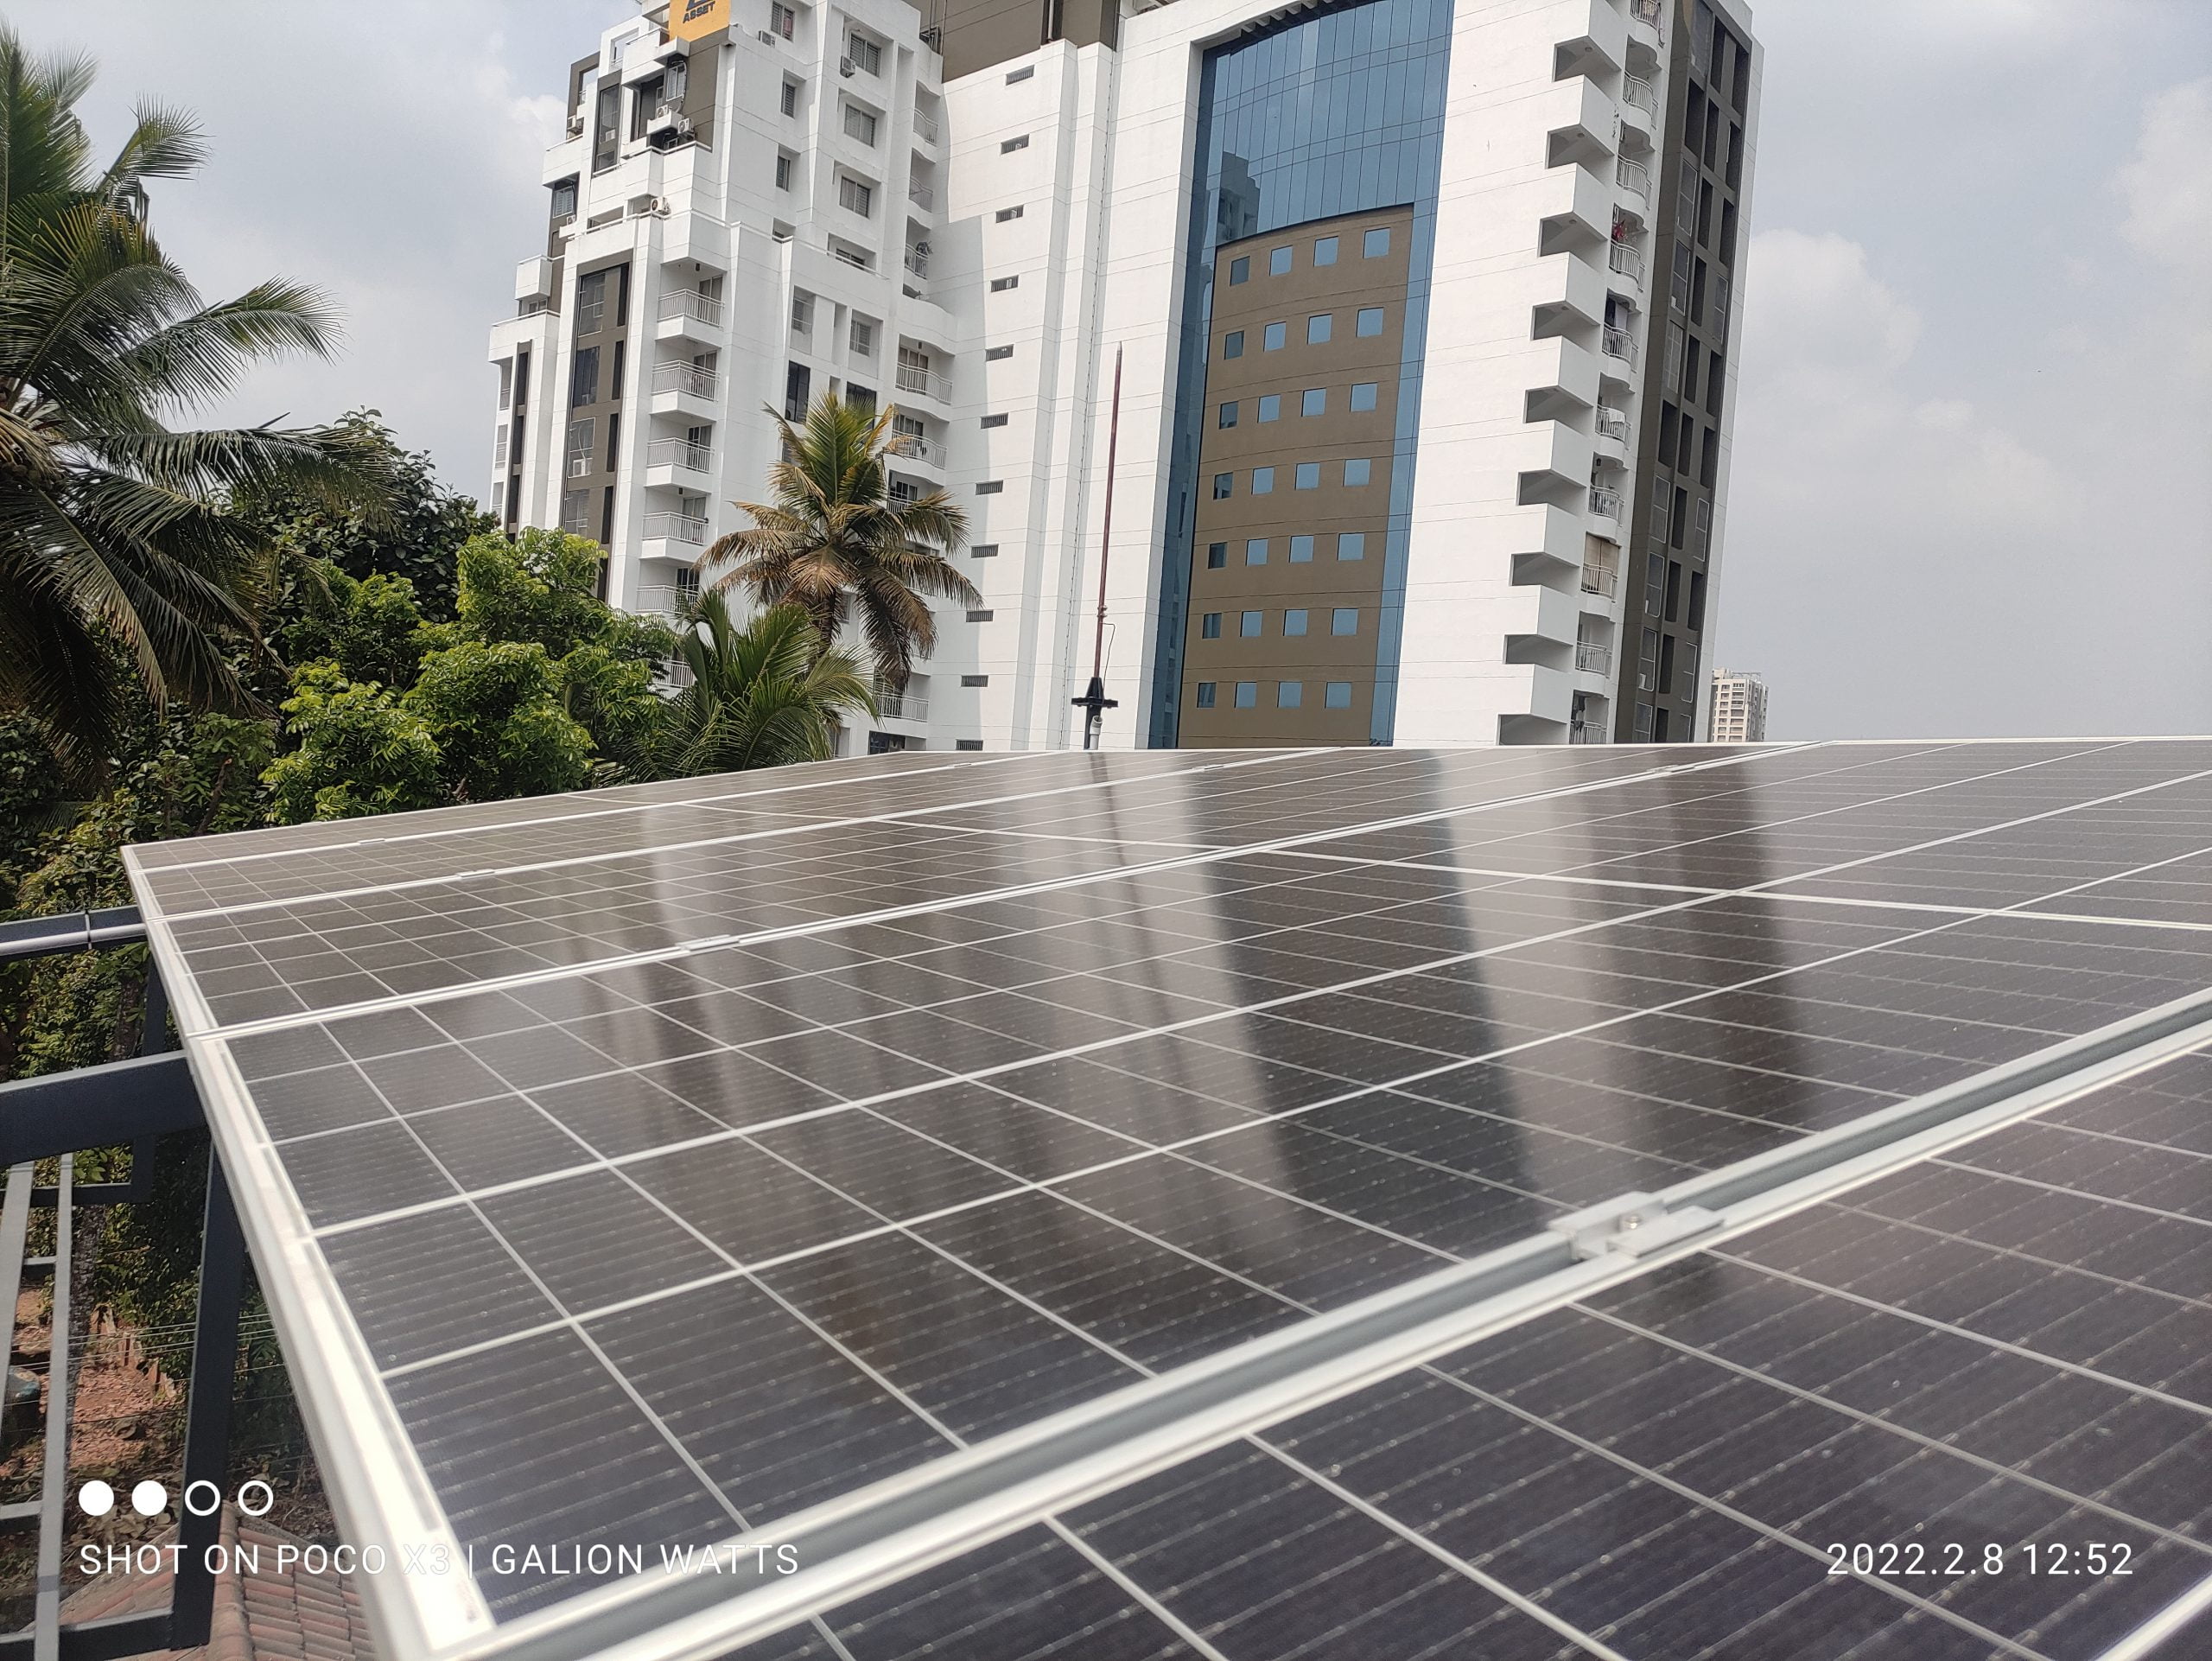 5 kW Solar Ongrid Power Plant at Kottayam